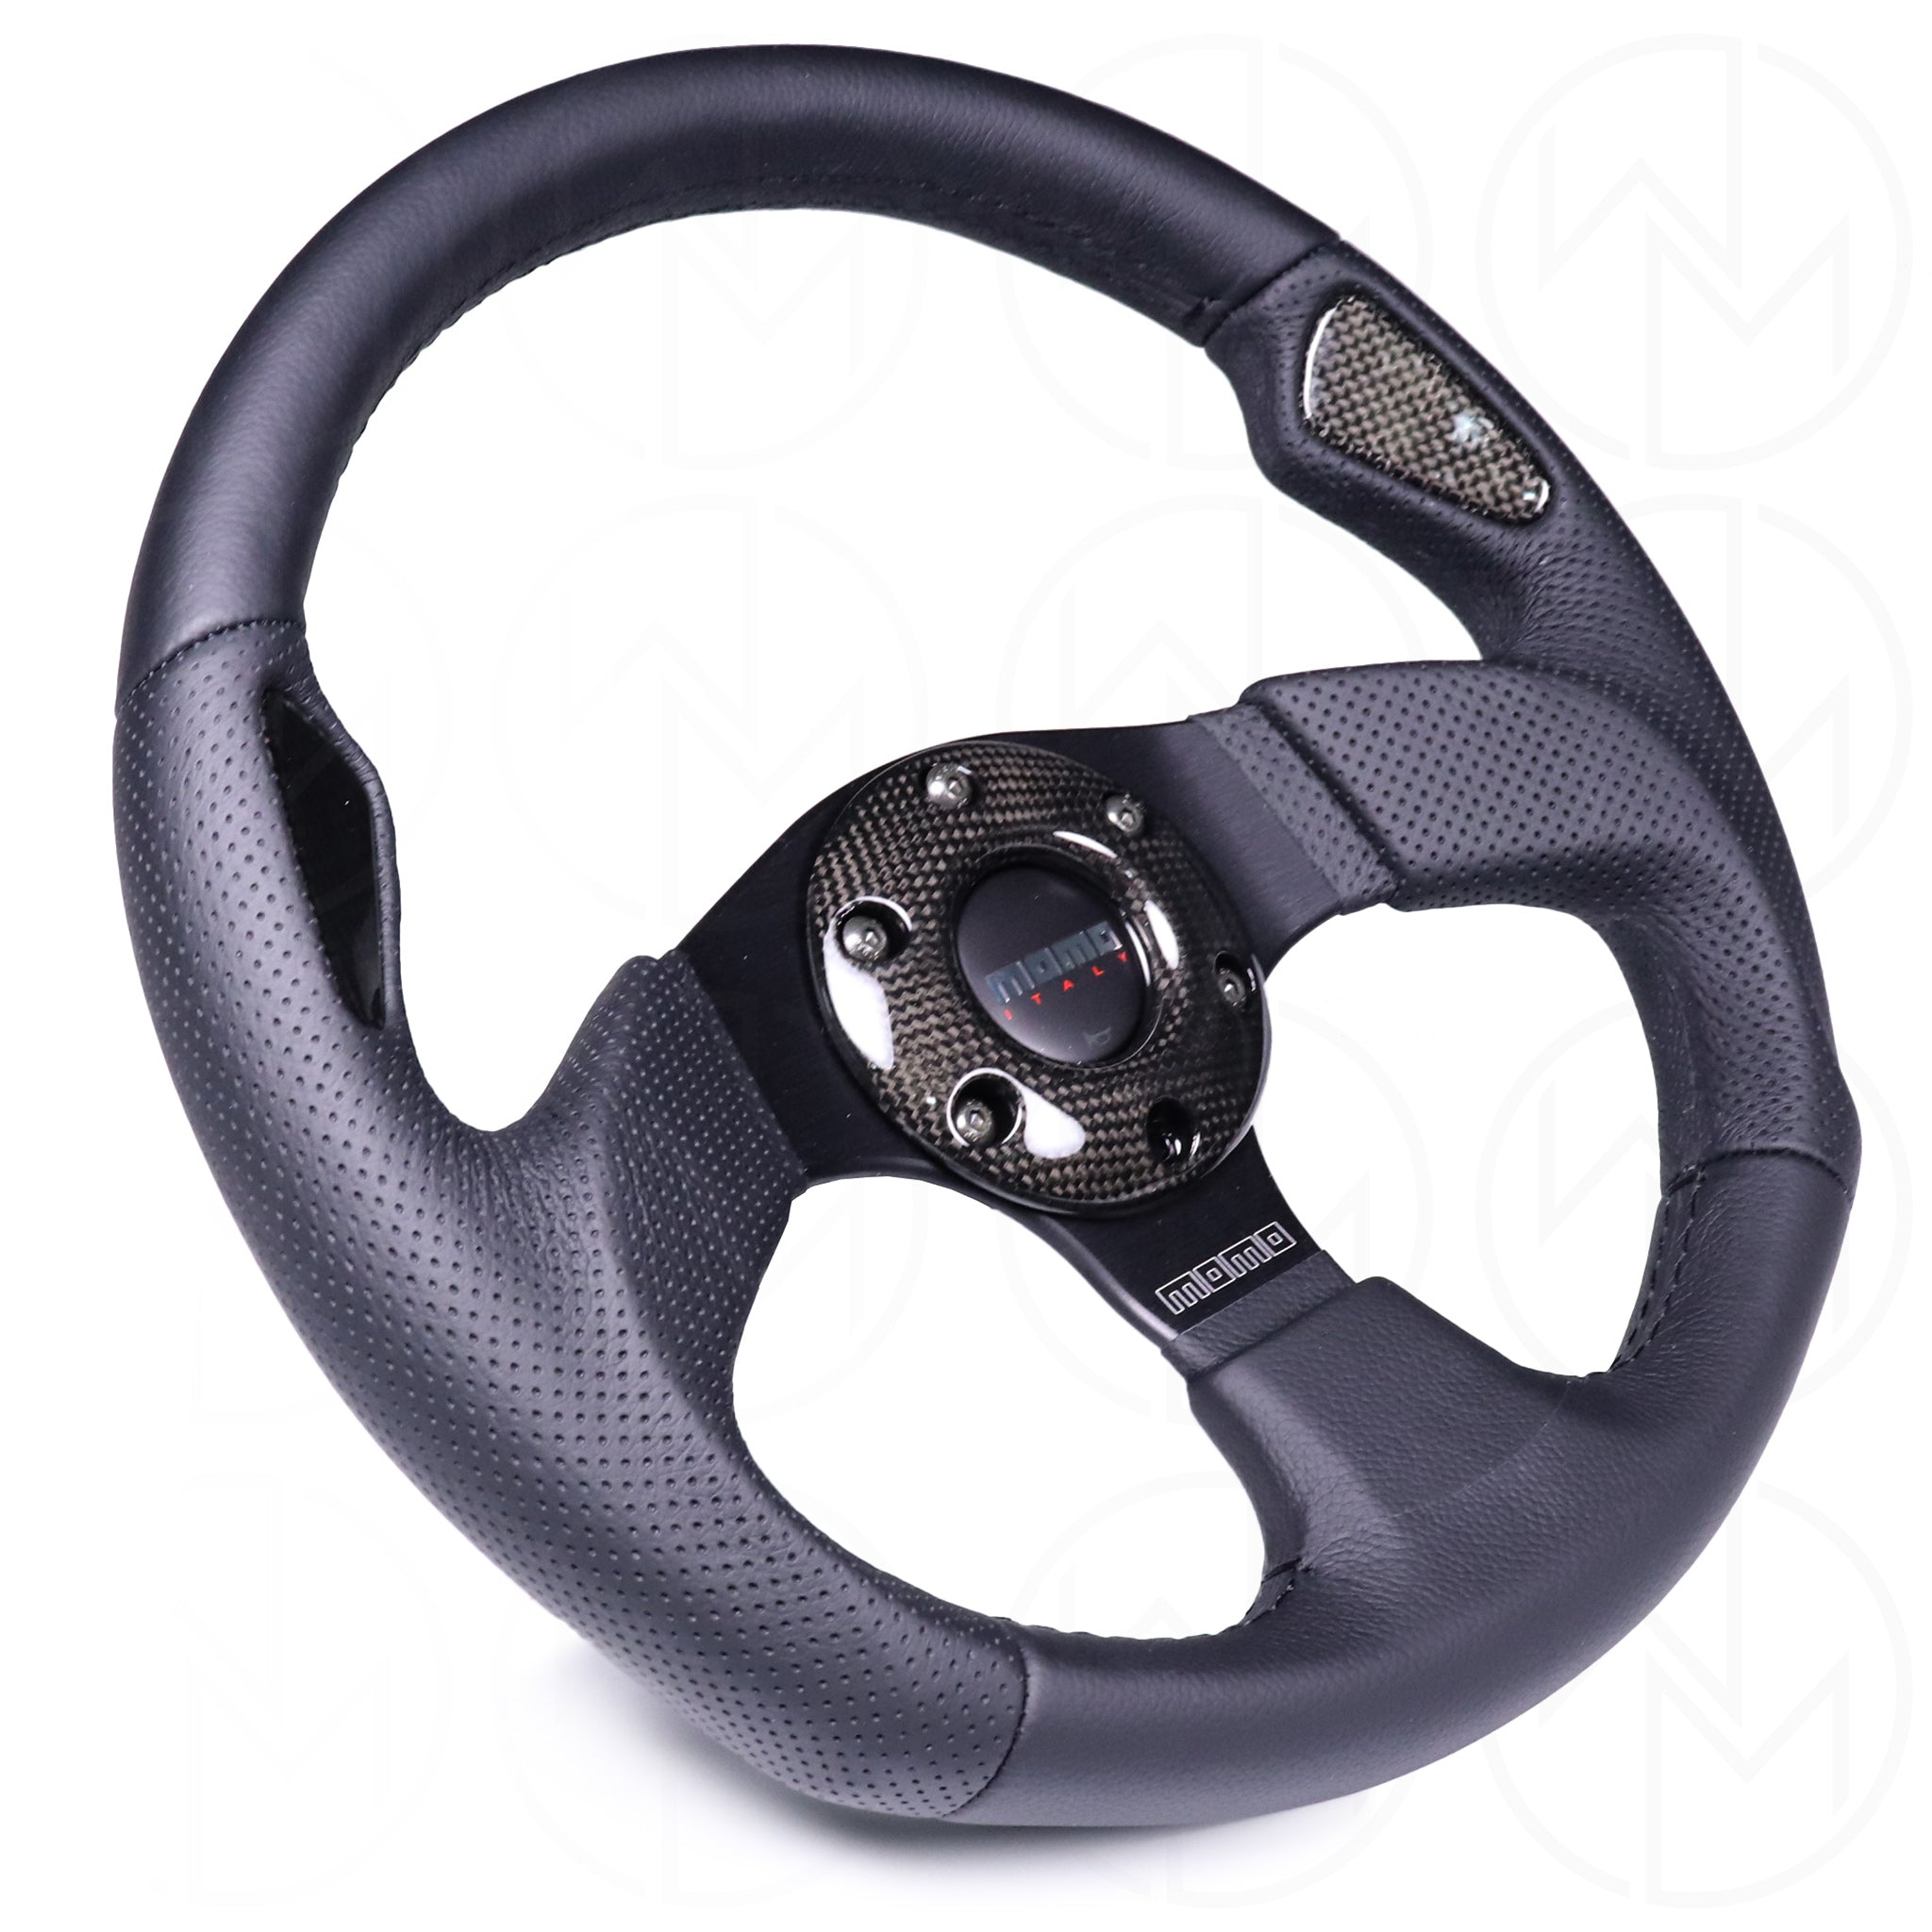 Momo Jet Steering Wheel - 320mm Leather Combo w/Black Stitch